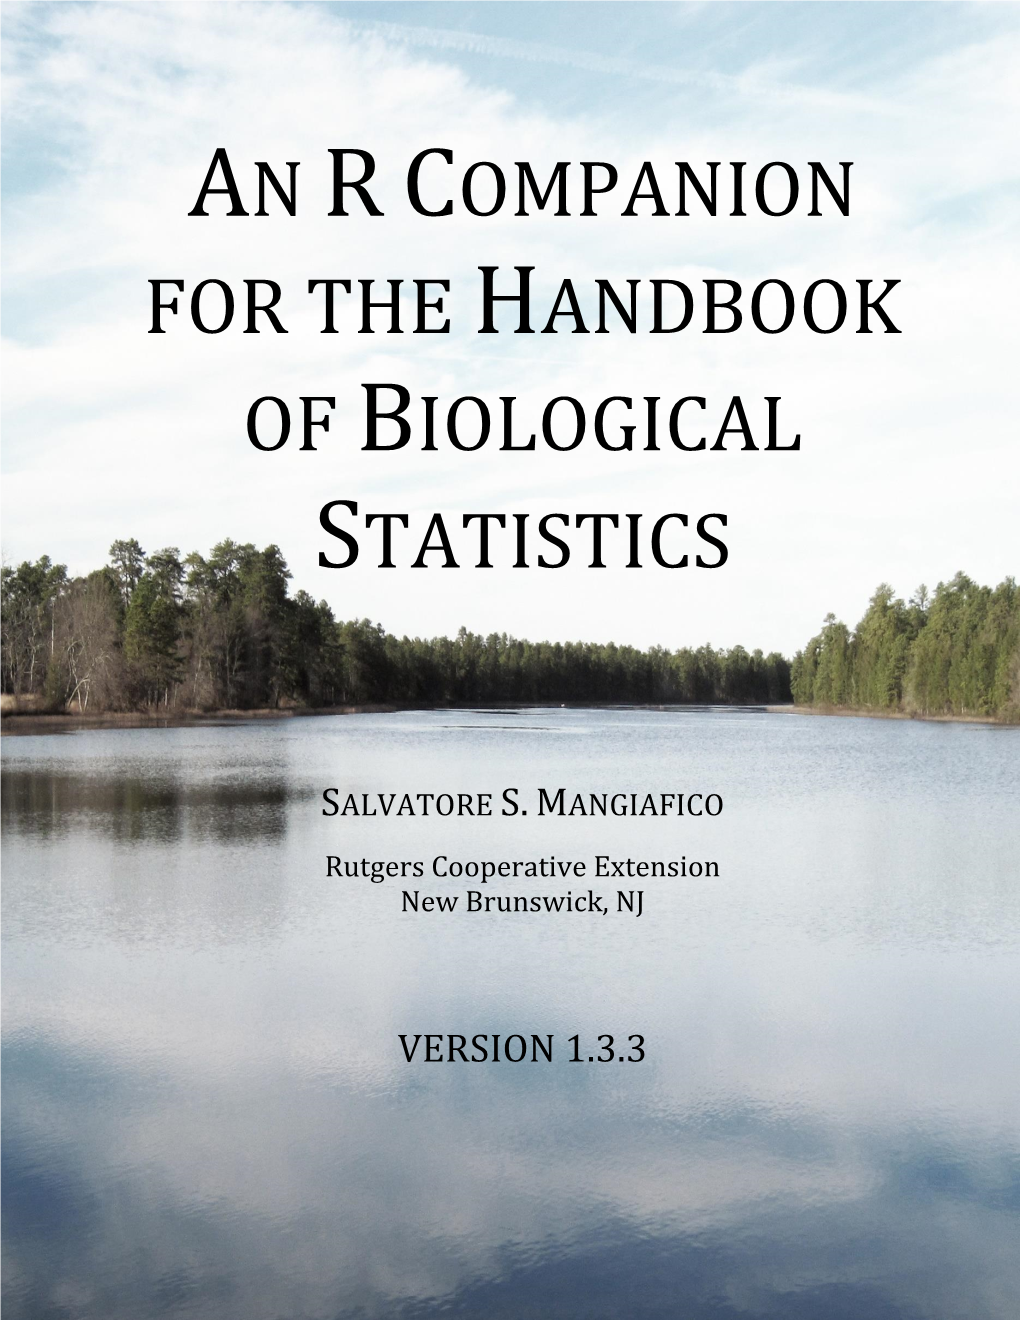 An R Companion for the Handbook of Biological Statistics